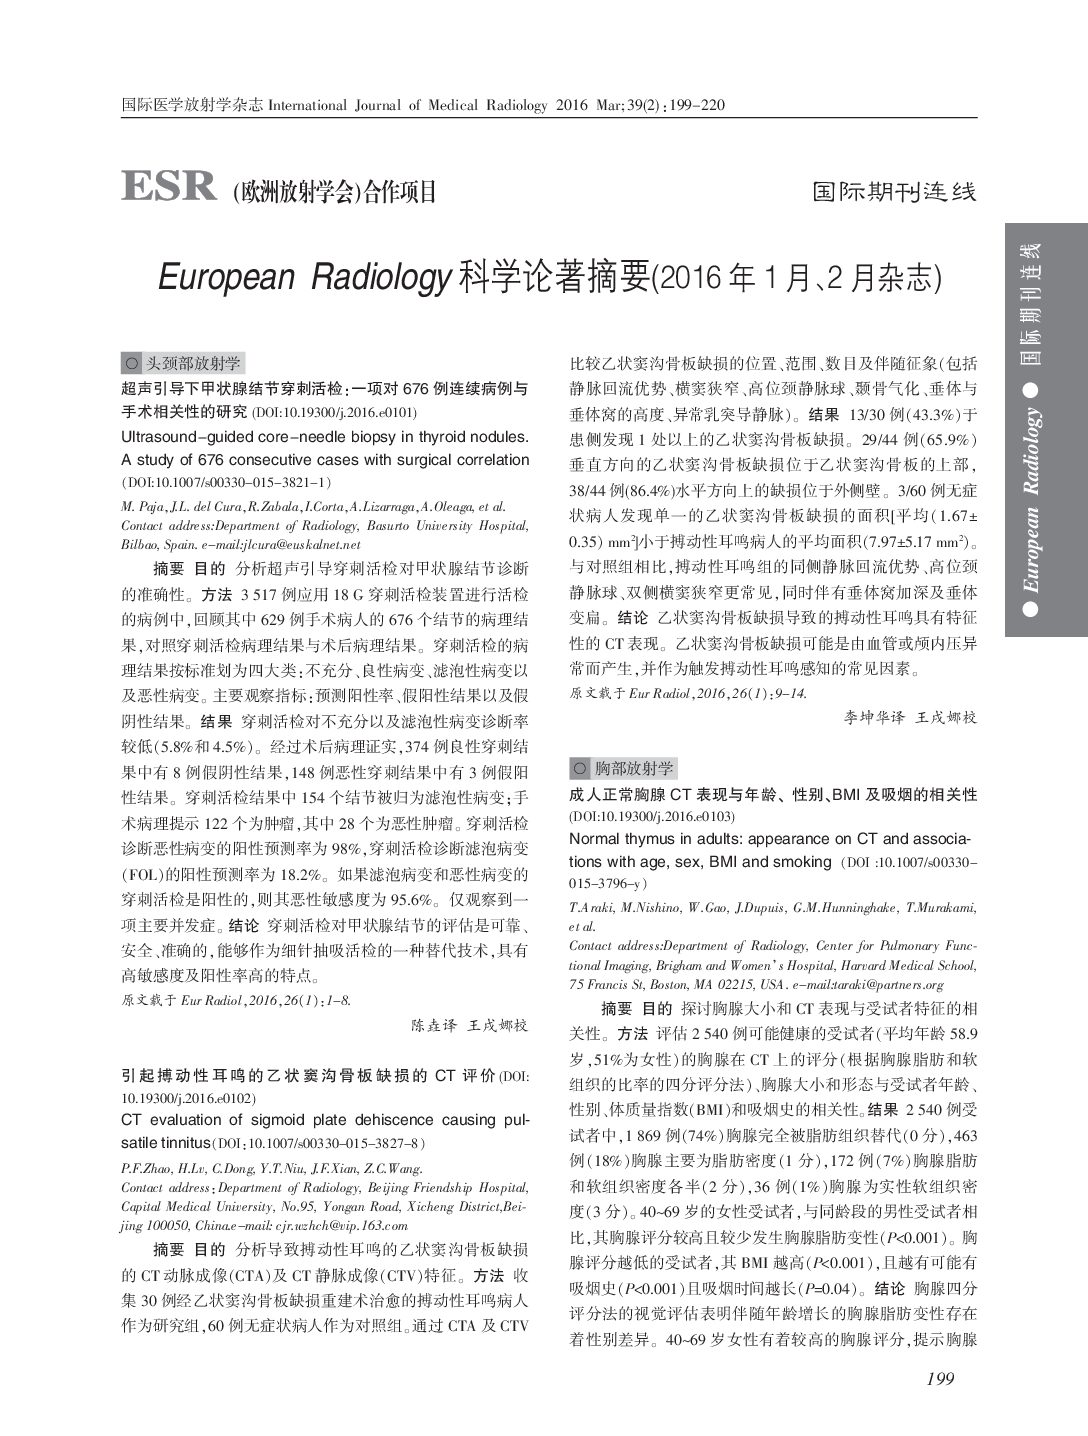 European Radiology Vol. 2016, January-February (4 MB)